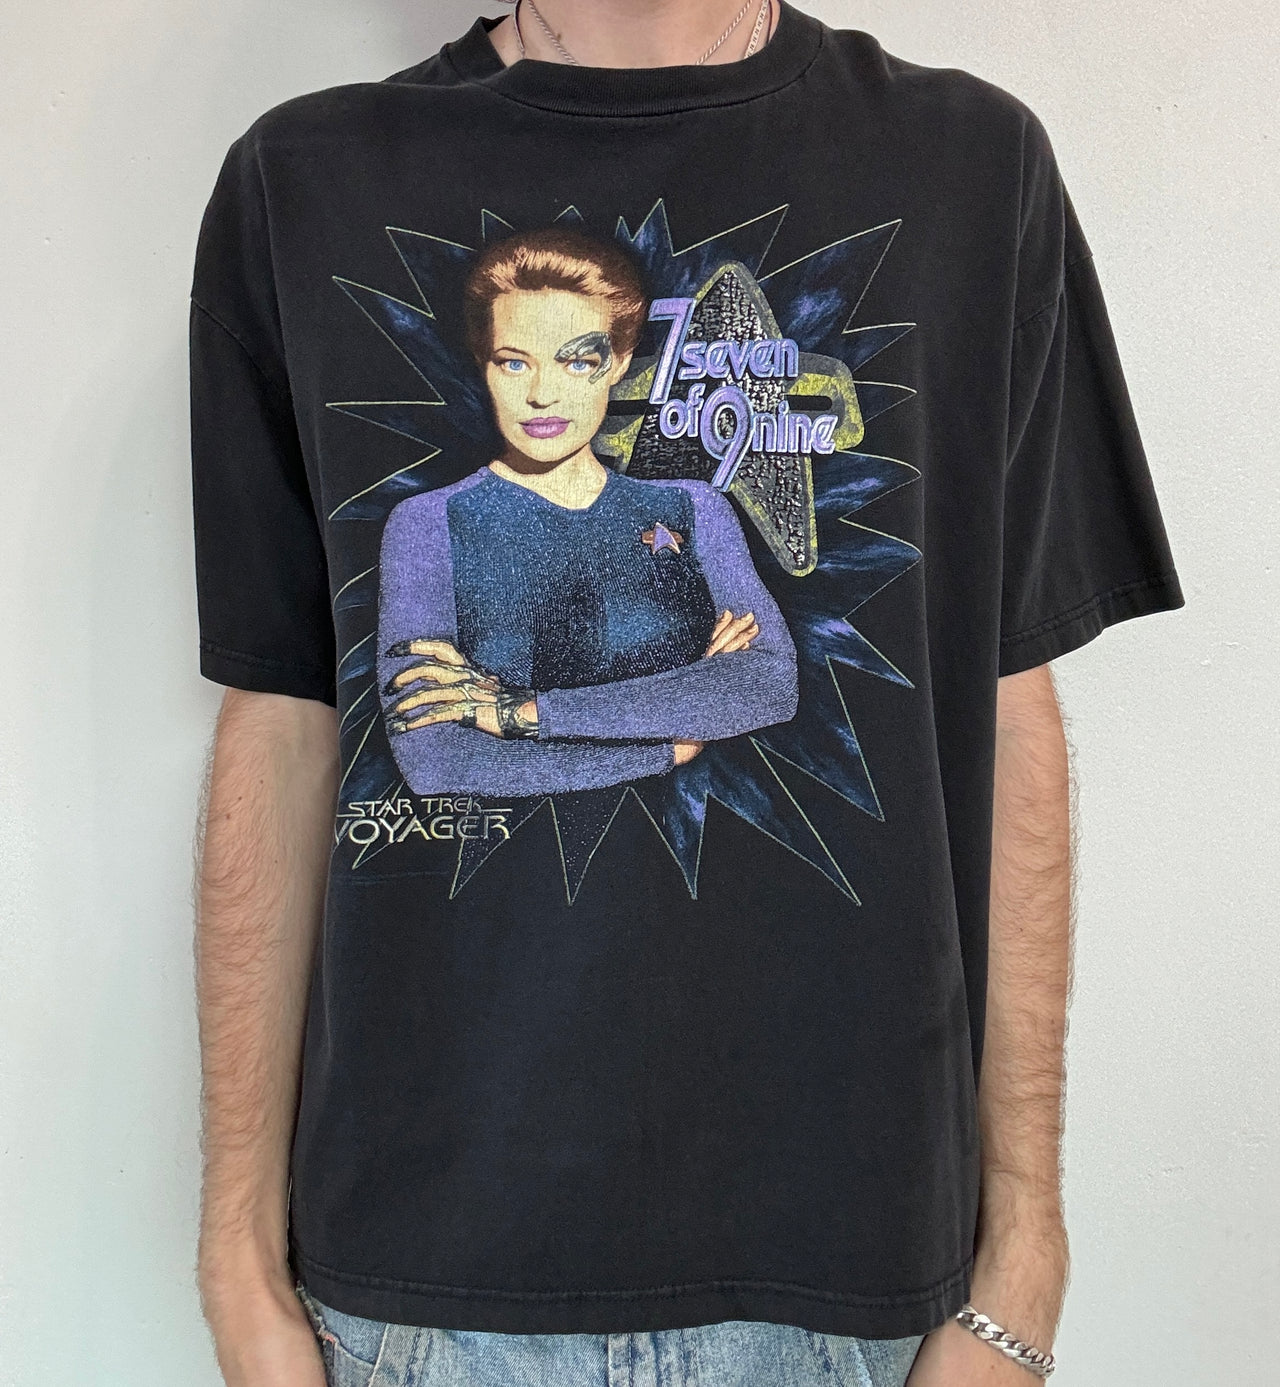 90s Star Trek Voyager Tee